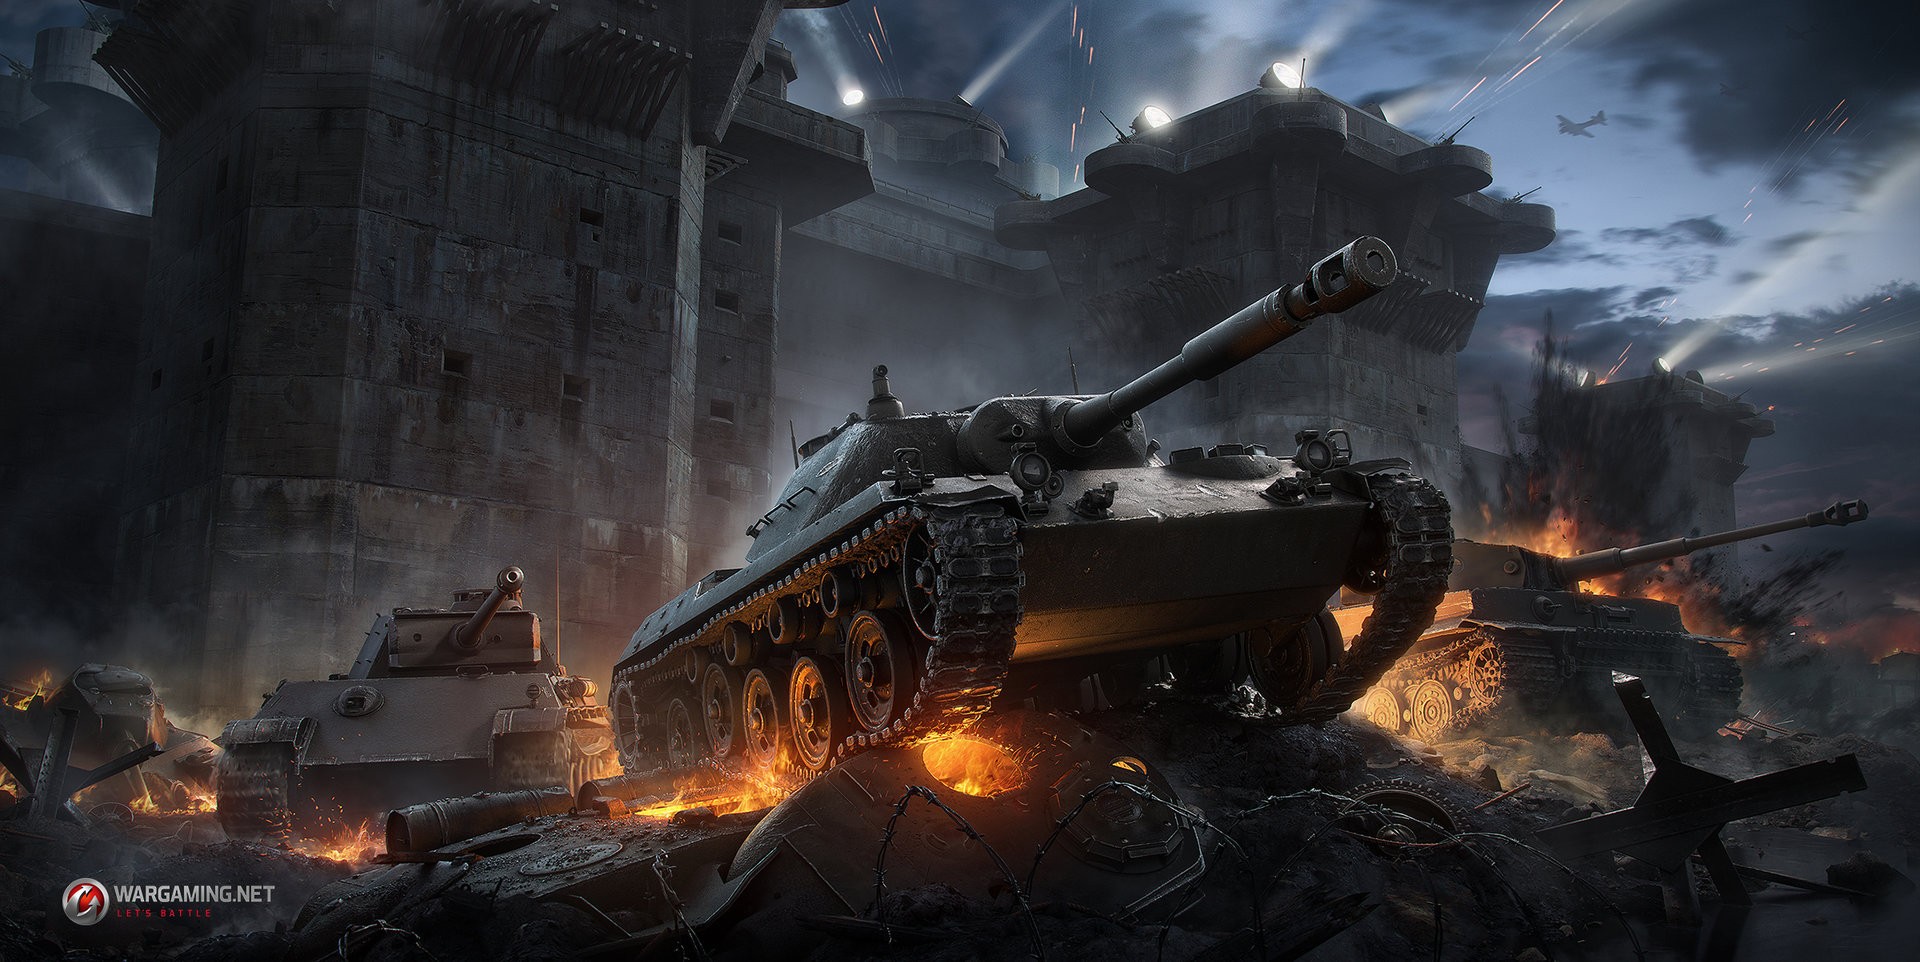 General 1920x962 World of Tanks tank Ru 251 PC gaming ArtStation video game art military vehicle war vehicle